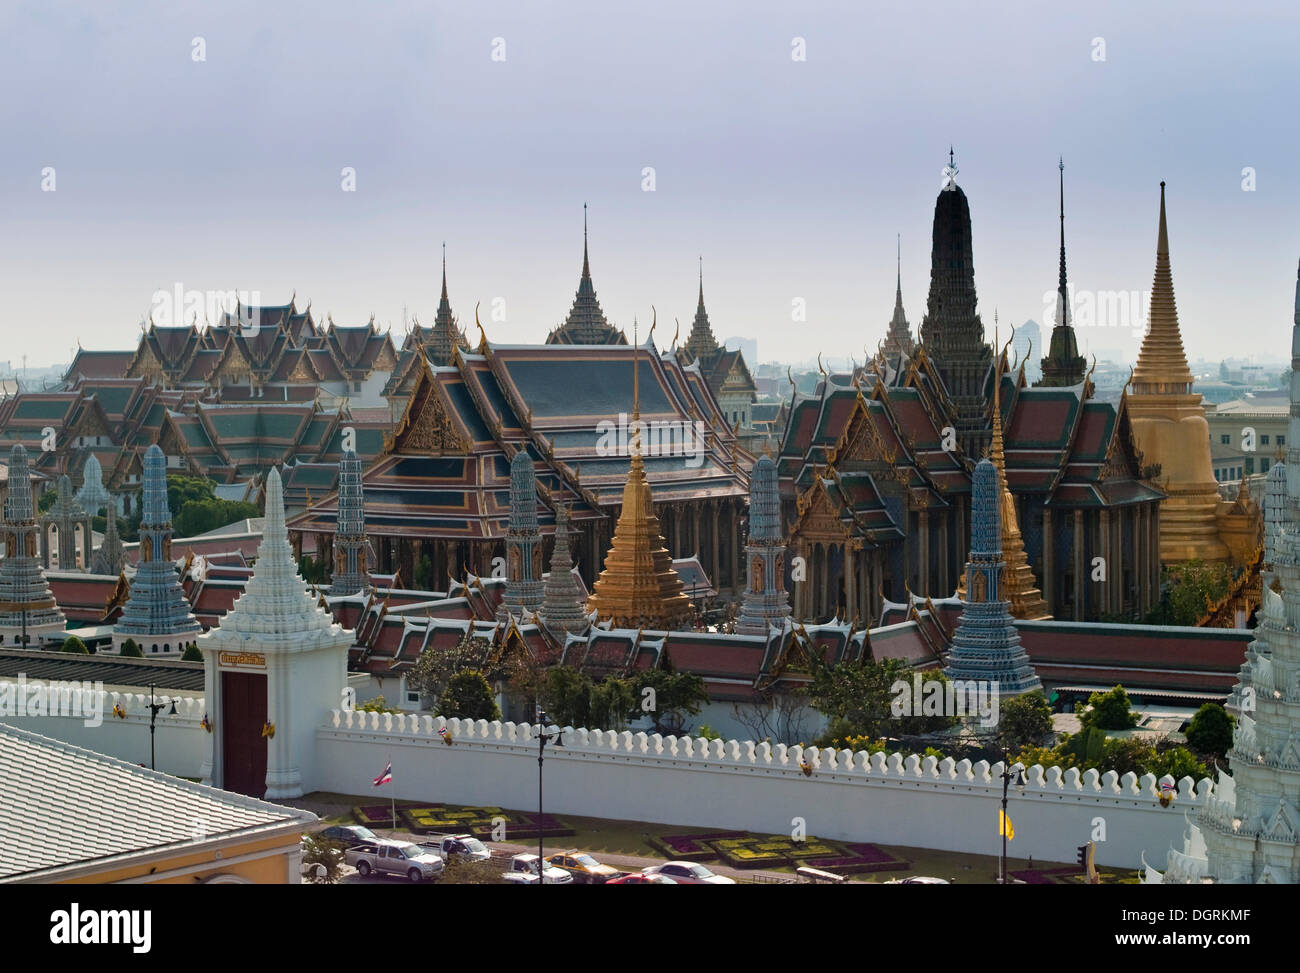 Wat Phra Kaew Temple of the Emerald Buddha, Bangkok, Thailand, Asia Stock Photo